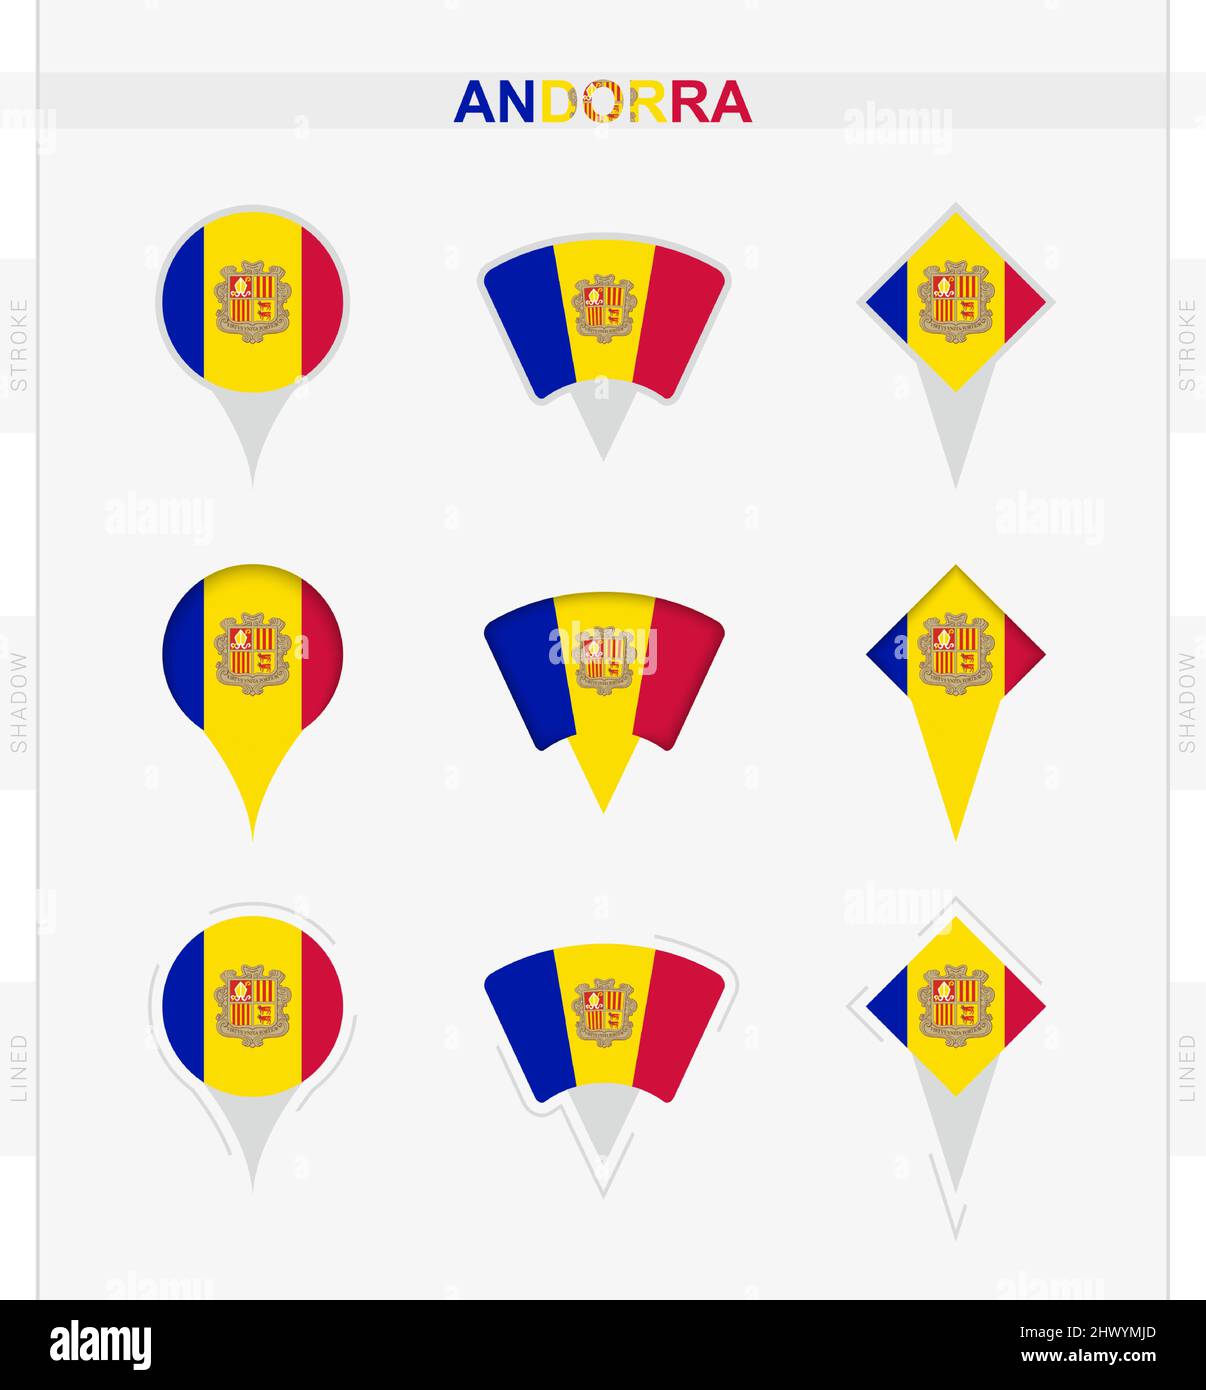 Andorra flag, set of location pin icons of Andorra flag. Vector illustration of national symbols. Stock Vector